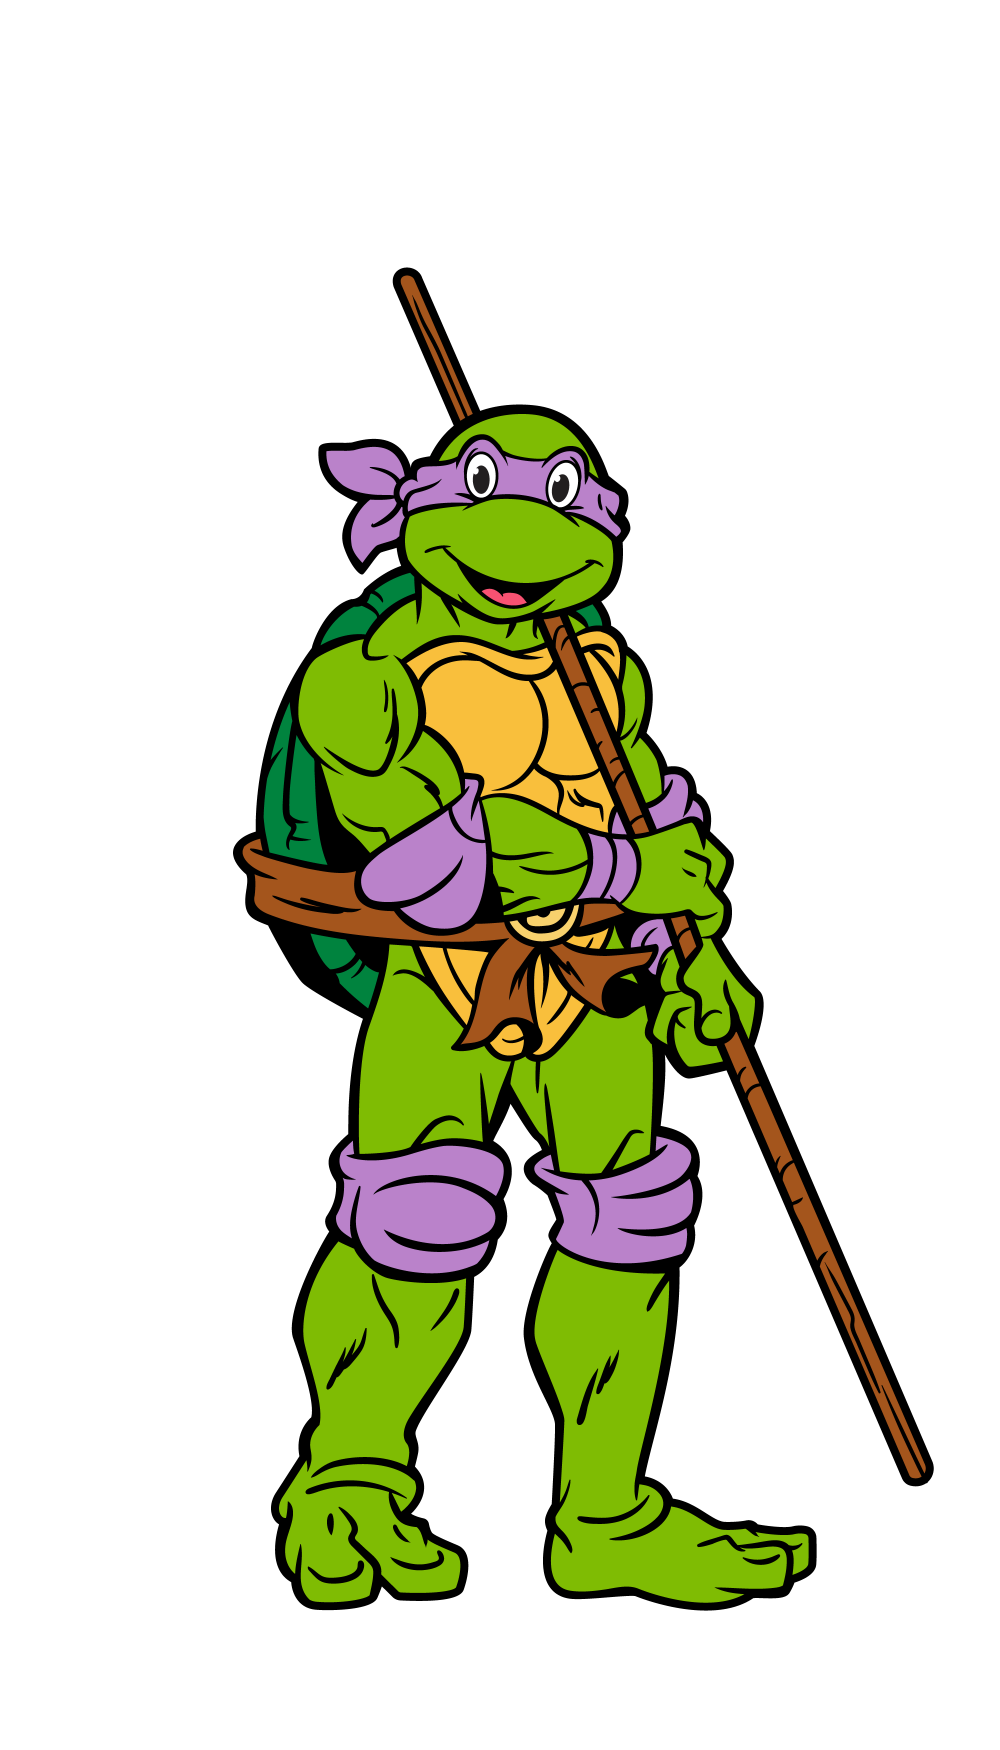 Donatello (568)